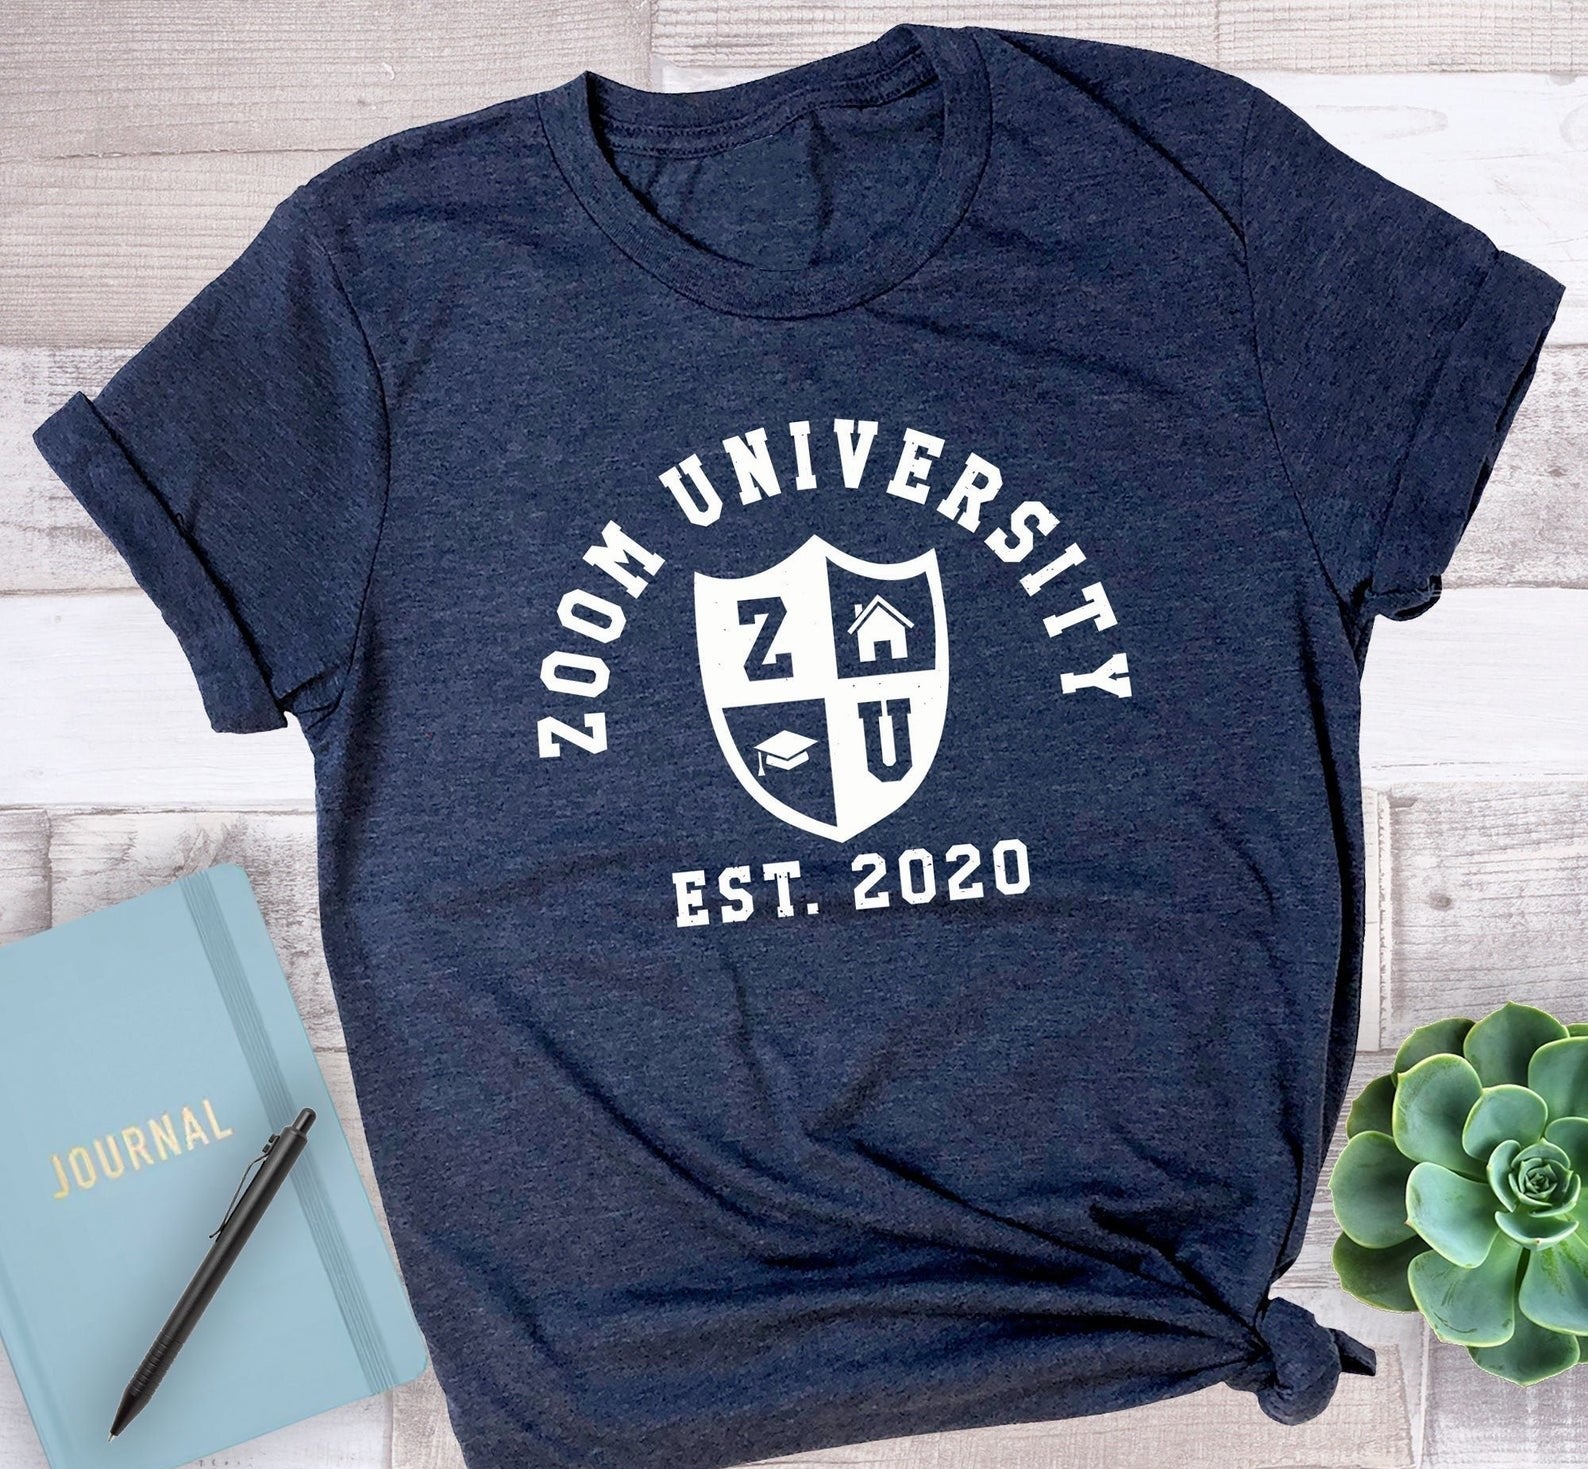 The shirt in blue that reads &quot;Zoom University est 2020&quot;